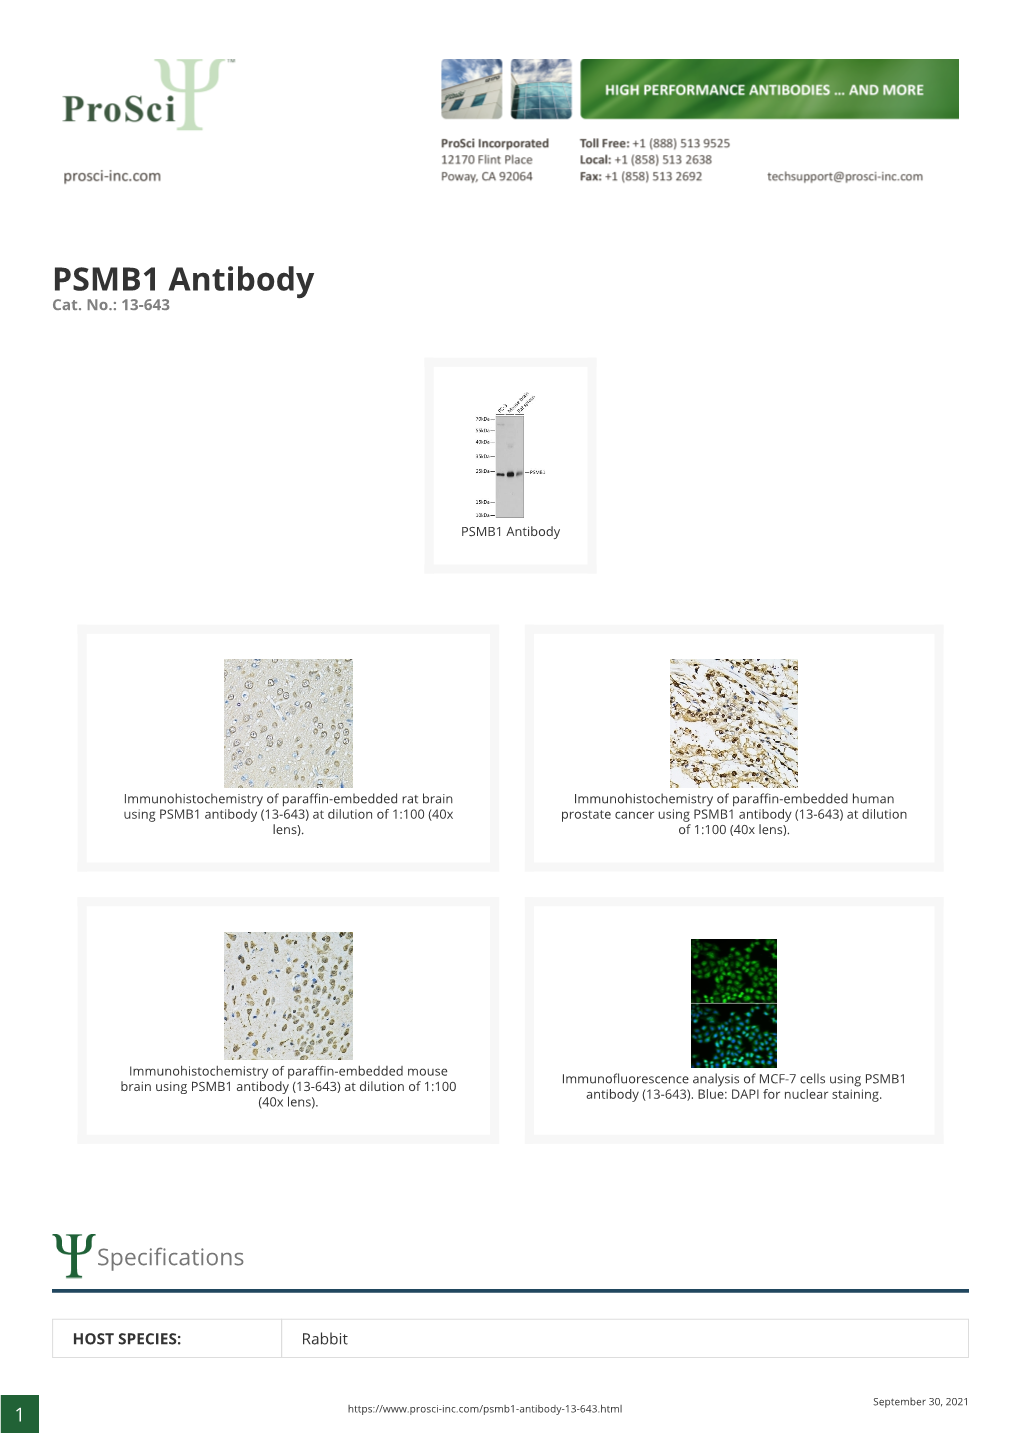 PSMB1 Antibody Cat